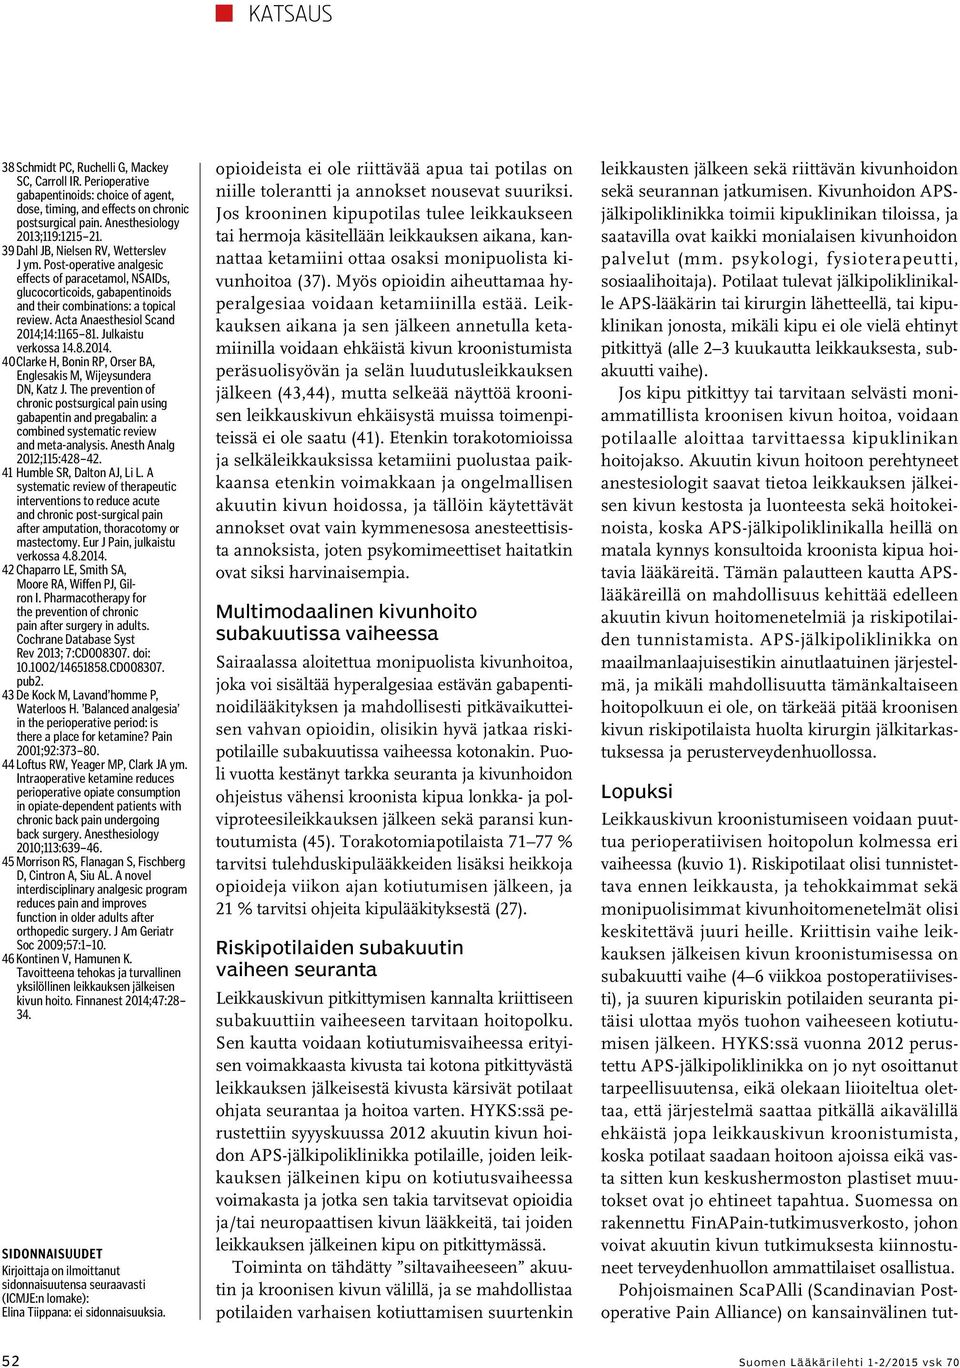 Acta Anaesthesiol Scand 2014;14:1165 81. Julkaistu verkossa 14.8.2014. 40 Clarke H, Bonin RP, Orser BA, Englesakis M, Wijeysundera DN, Katz J.